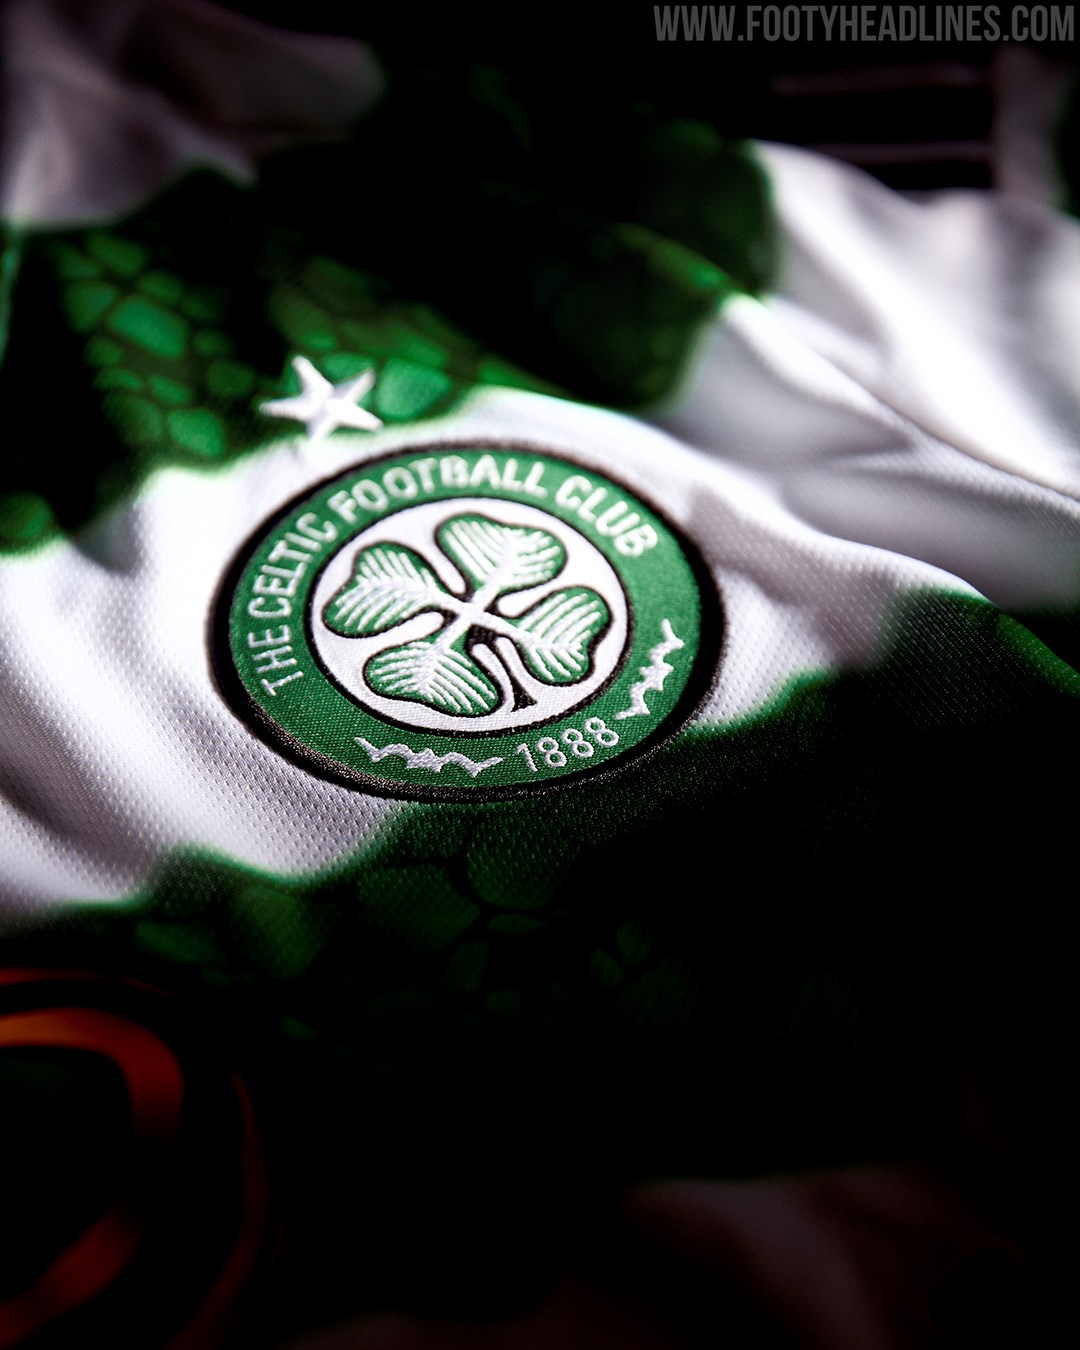 Footy Headlines trail the 23/24 Celtic kit